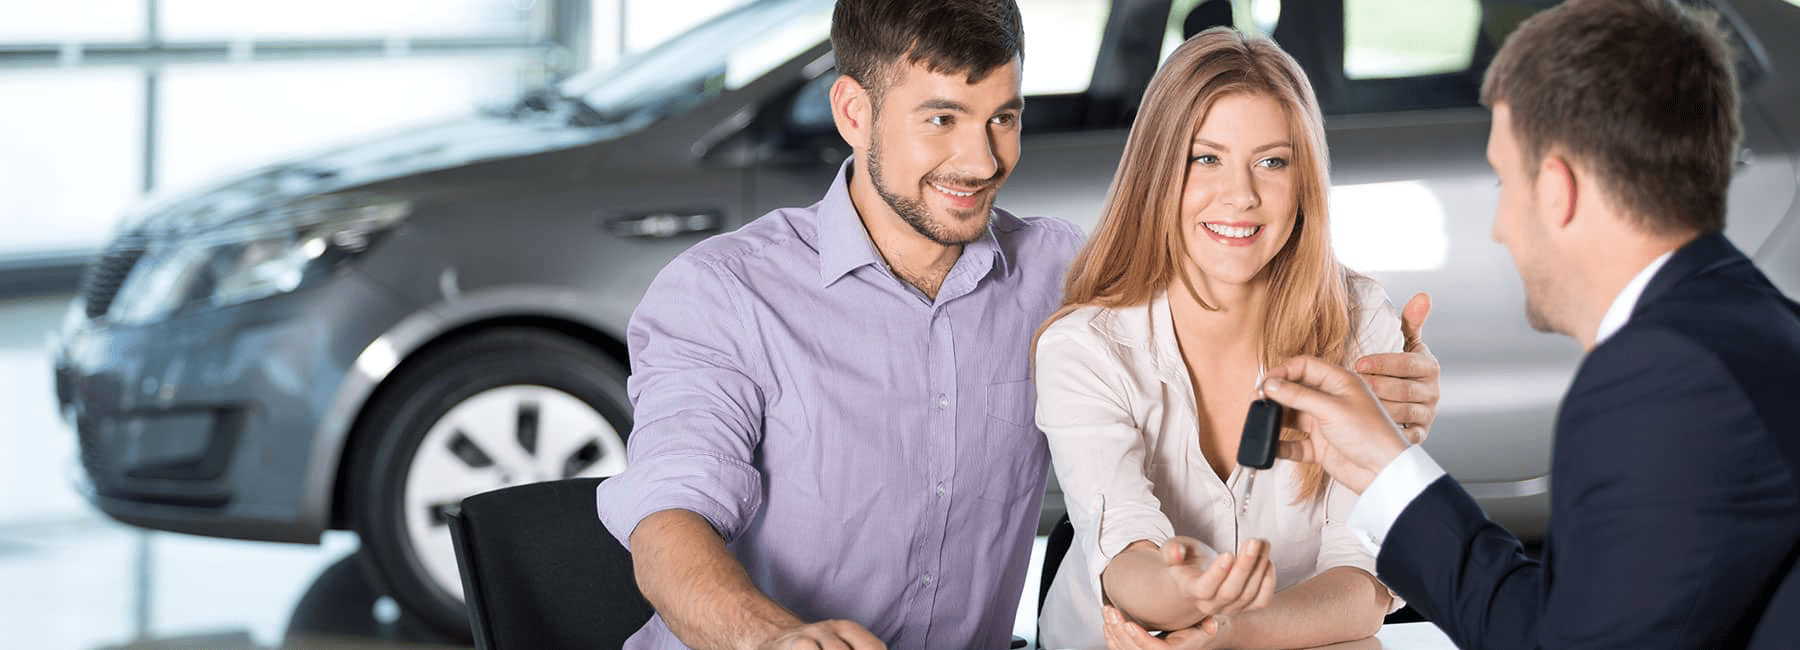 dealer hands new car keys to smiling couple